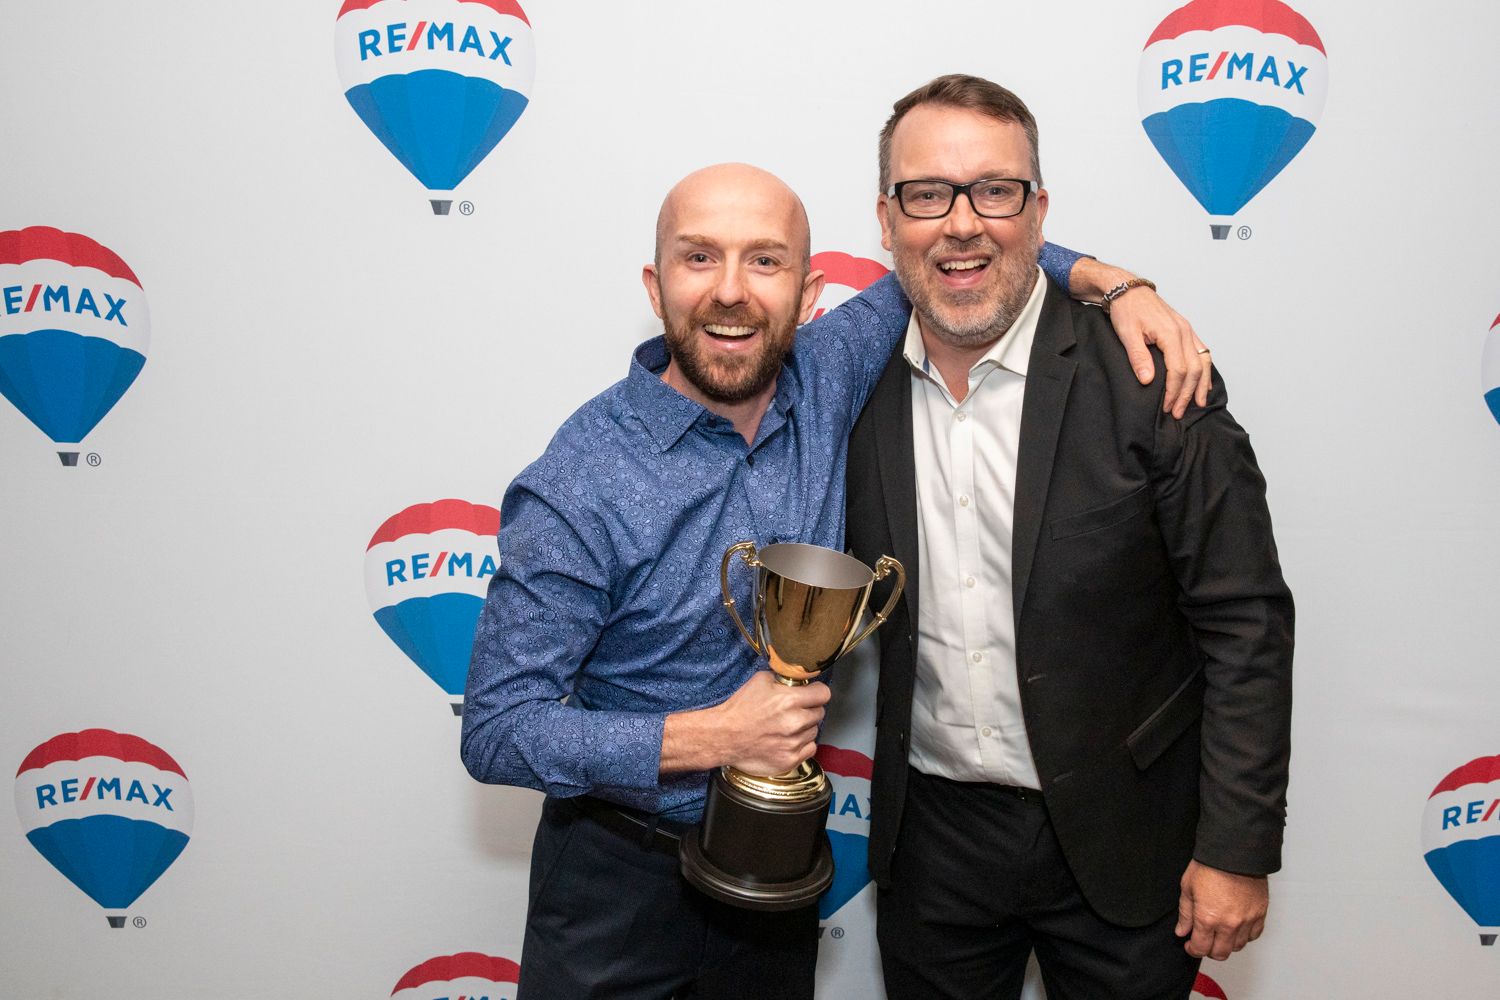 Remax Realtor Vancouver Matt Henry accepting awardting